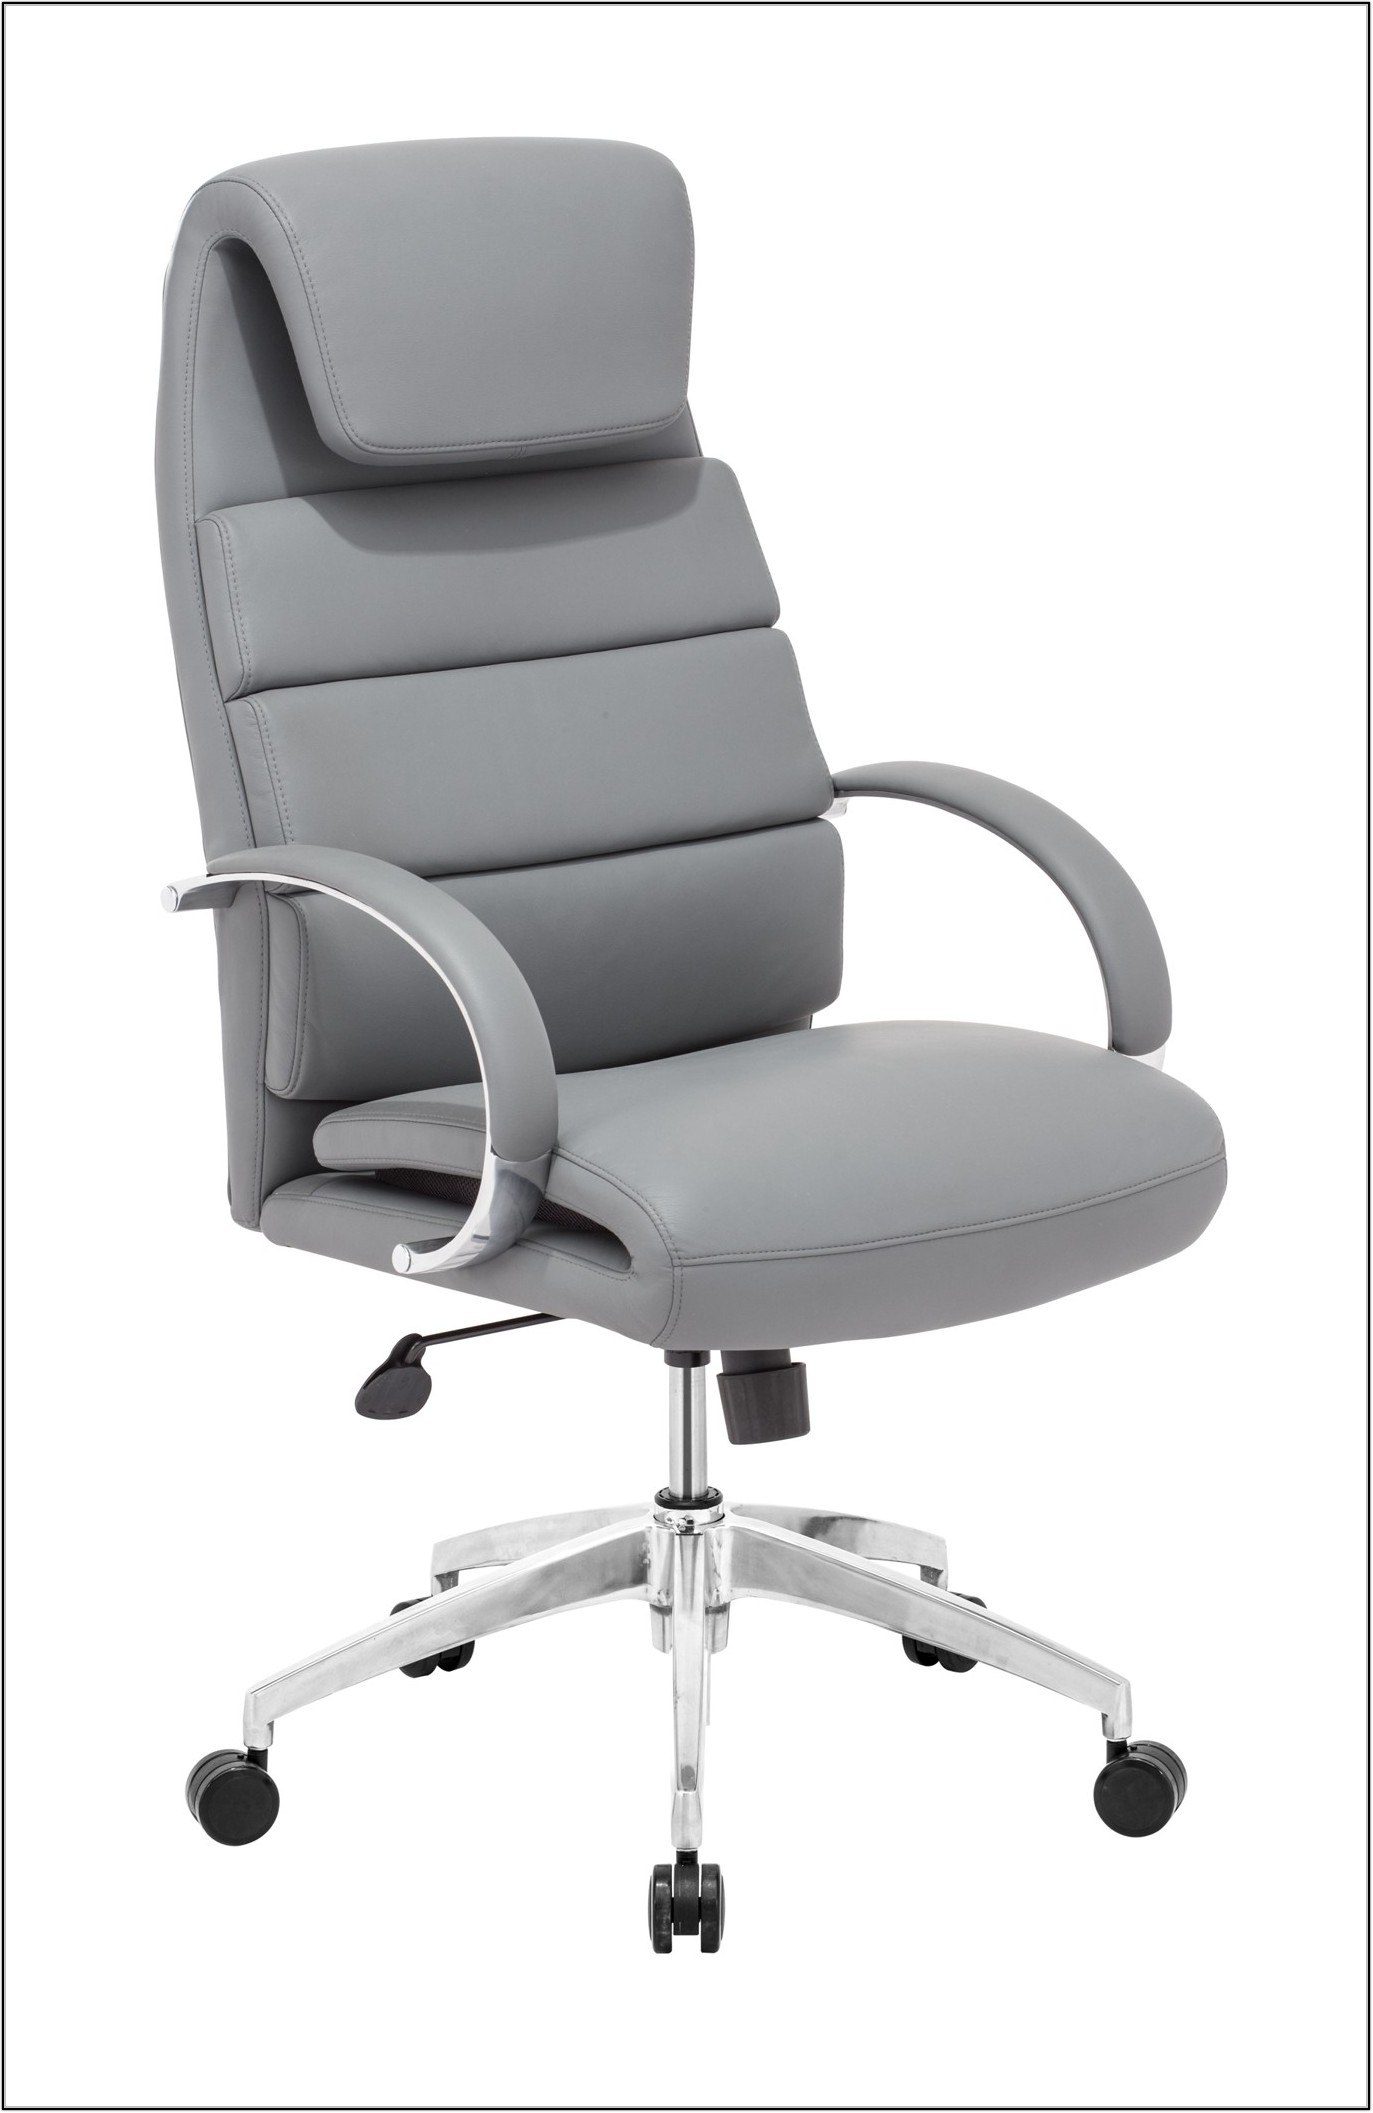 Modern Office Chairs Canada - Chairs : Home Design Ideas #58yQREpDgr119